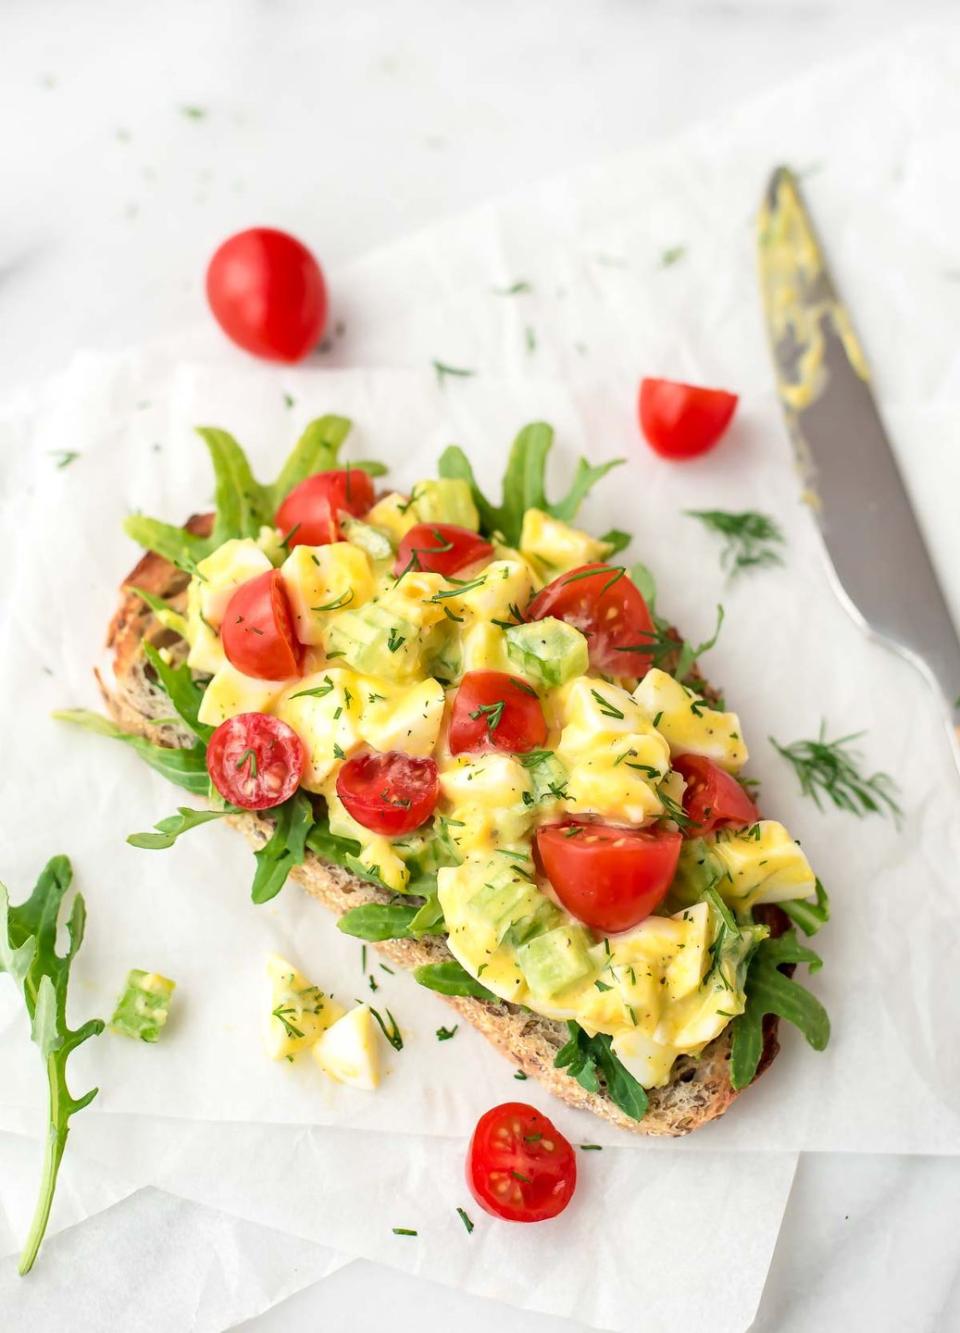 Healthy Egg Salad